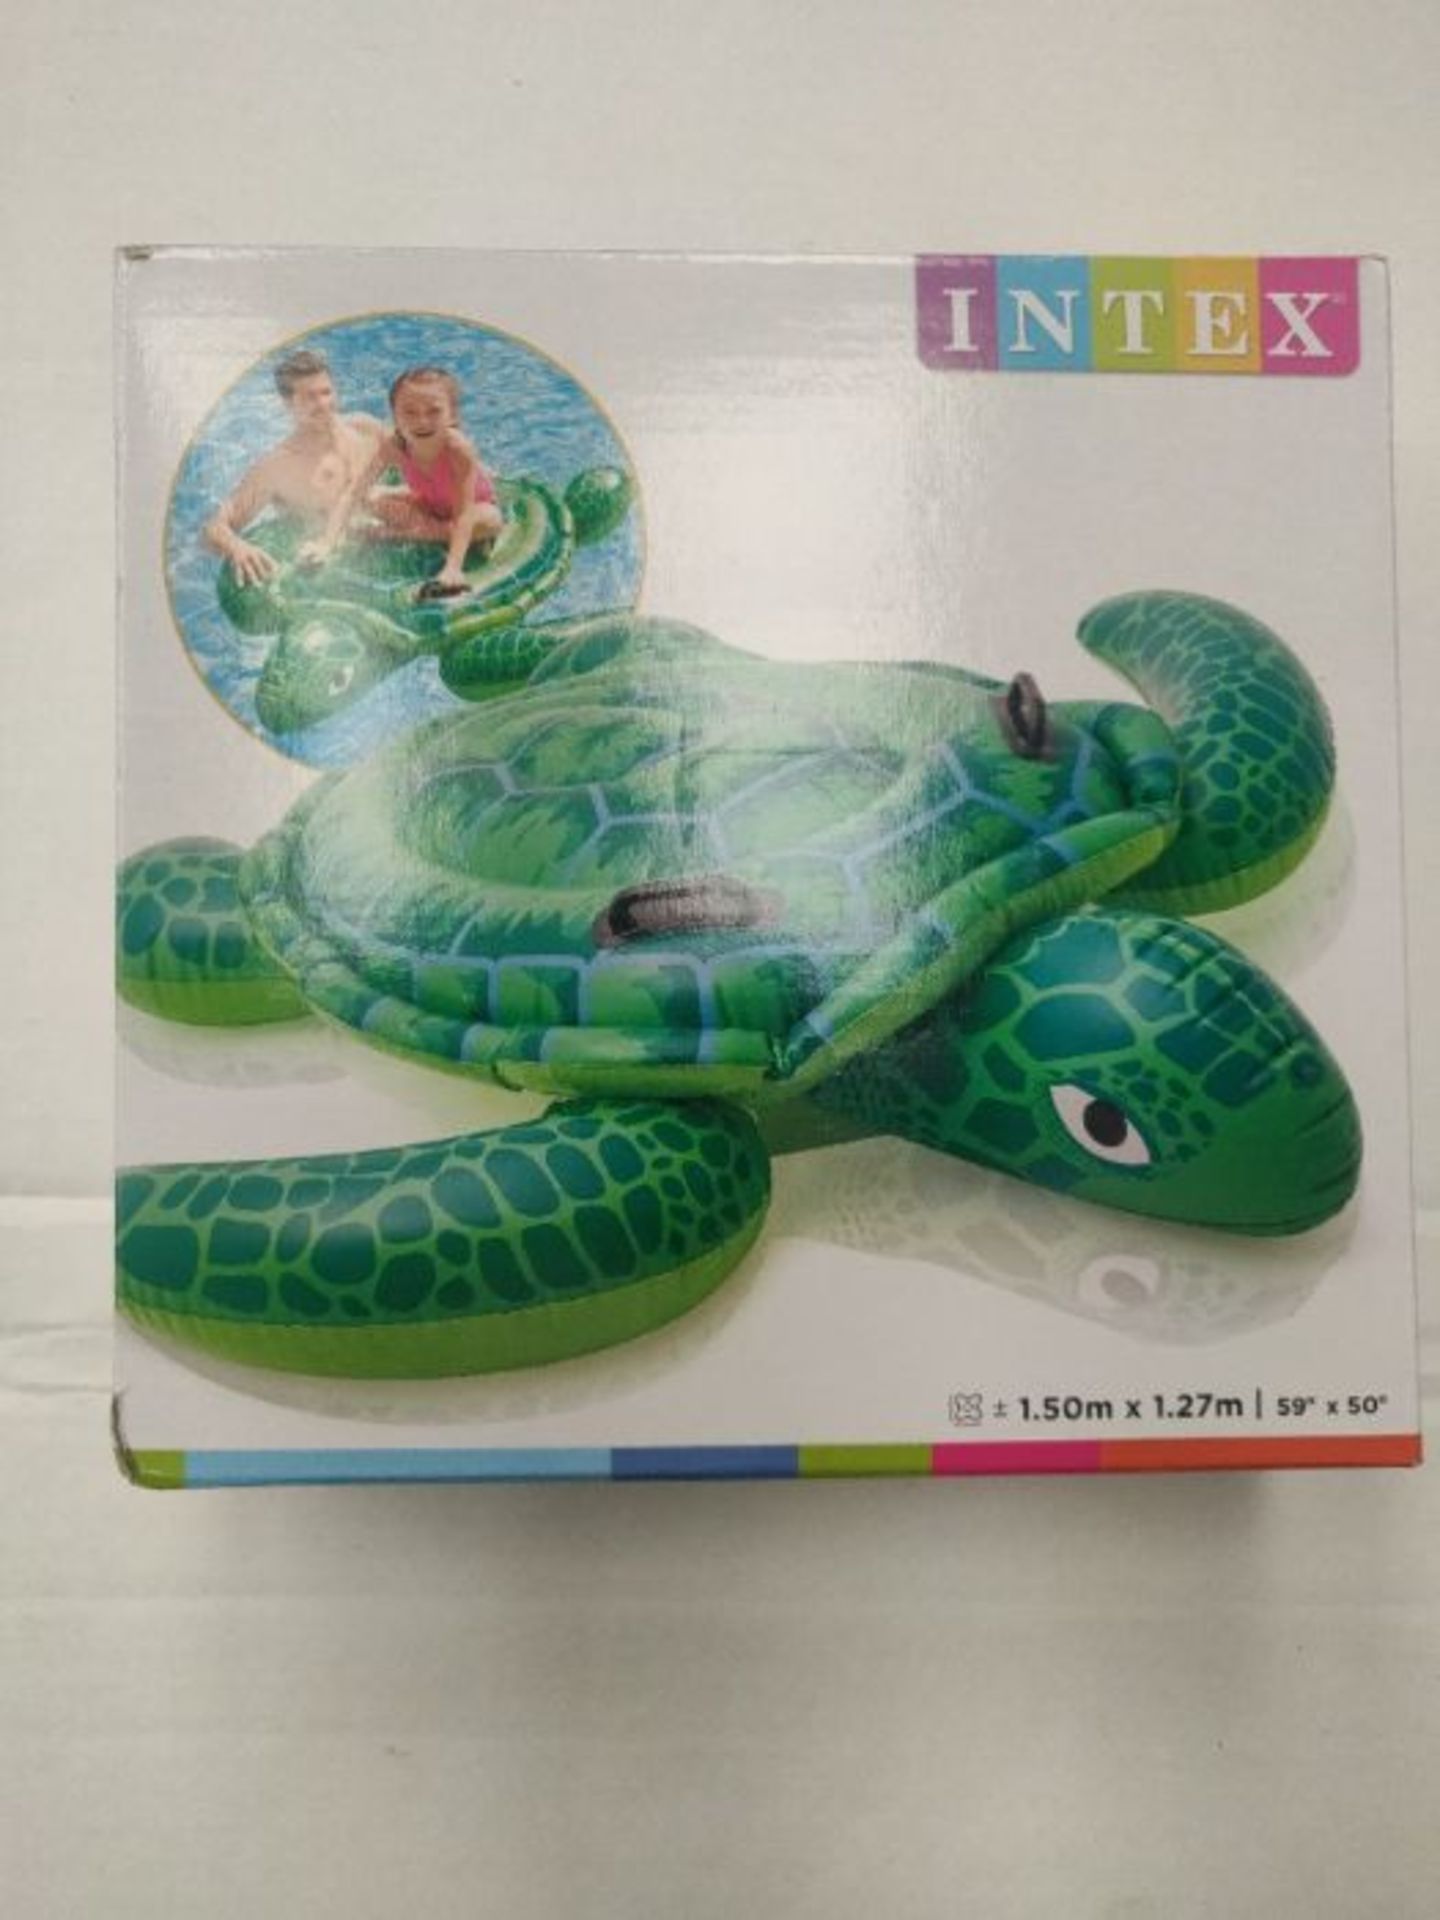 Intex Lil' Sea Turtle Ride On 1.50m x 1.27m Swimming Pool Beach Toy #57524NP - Image 2 of 3